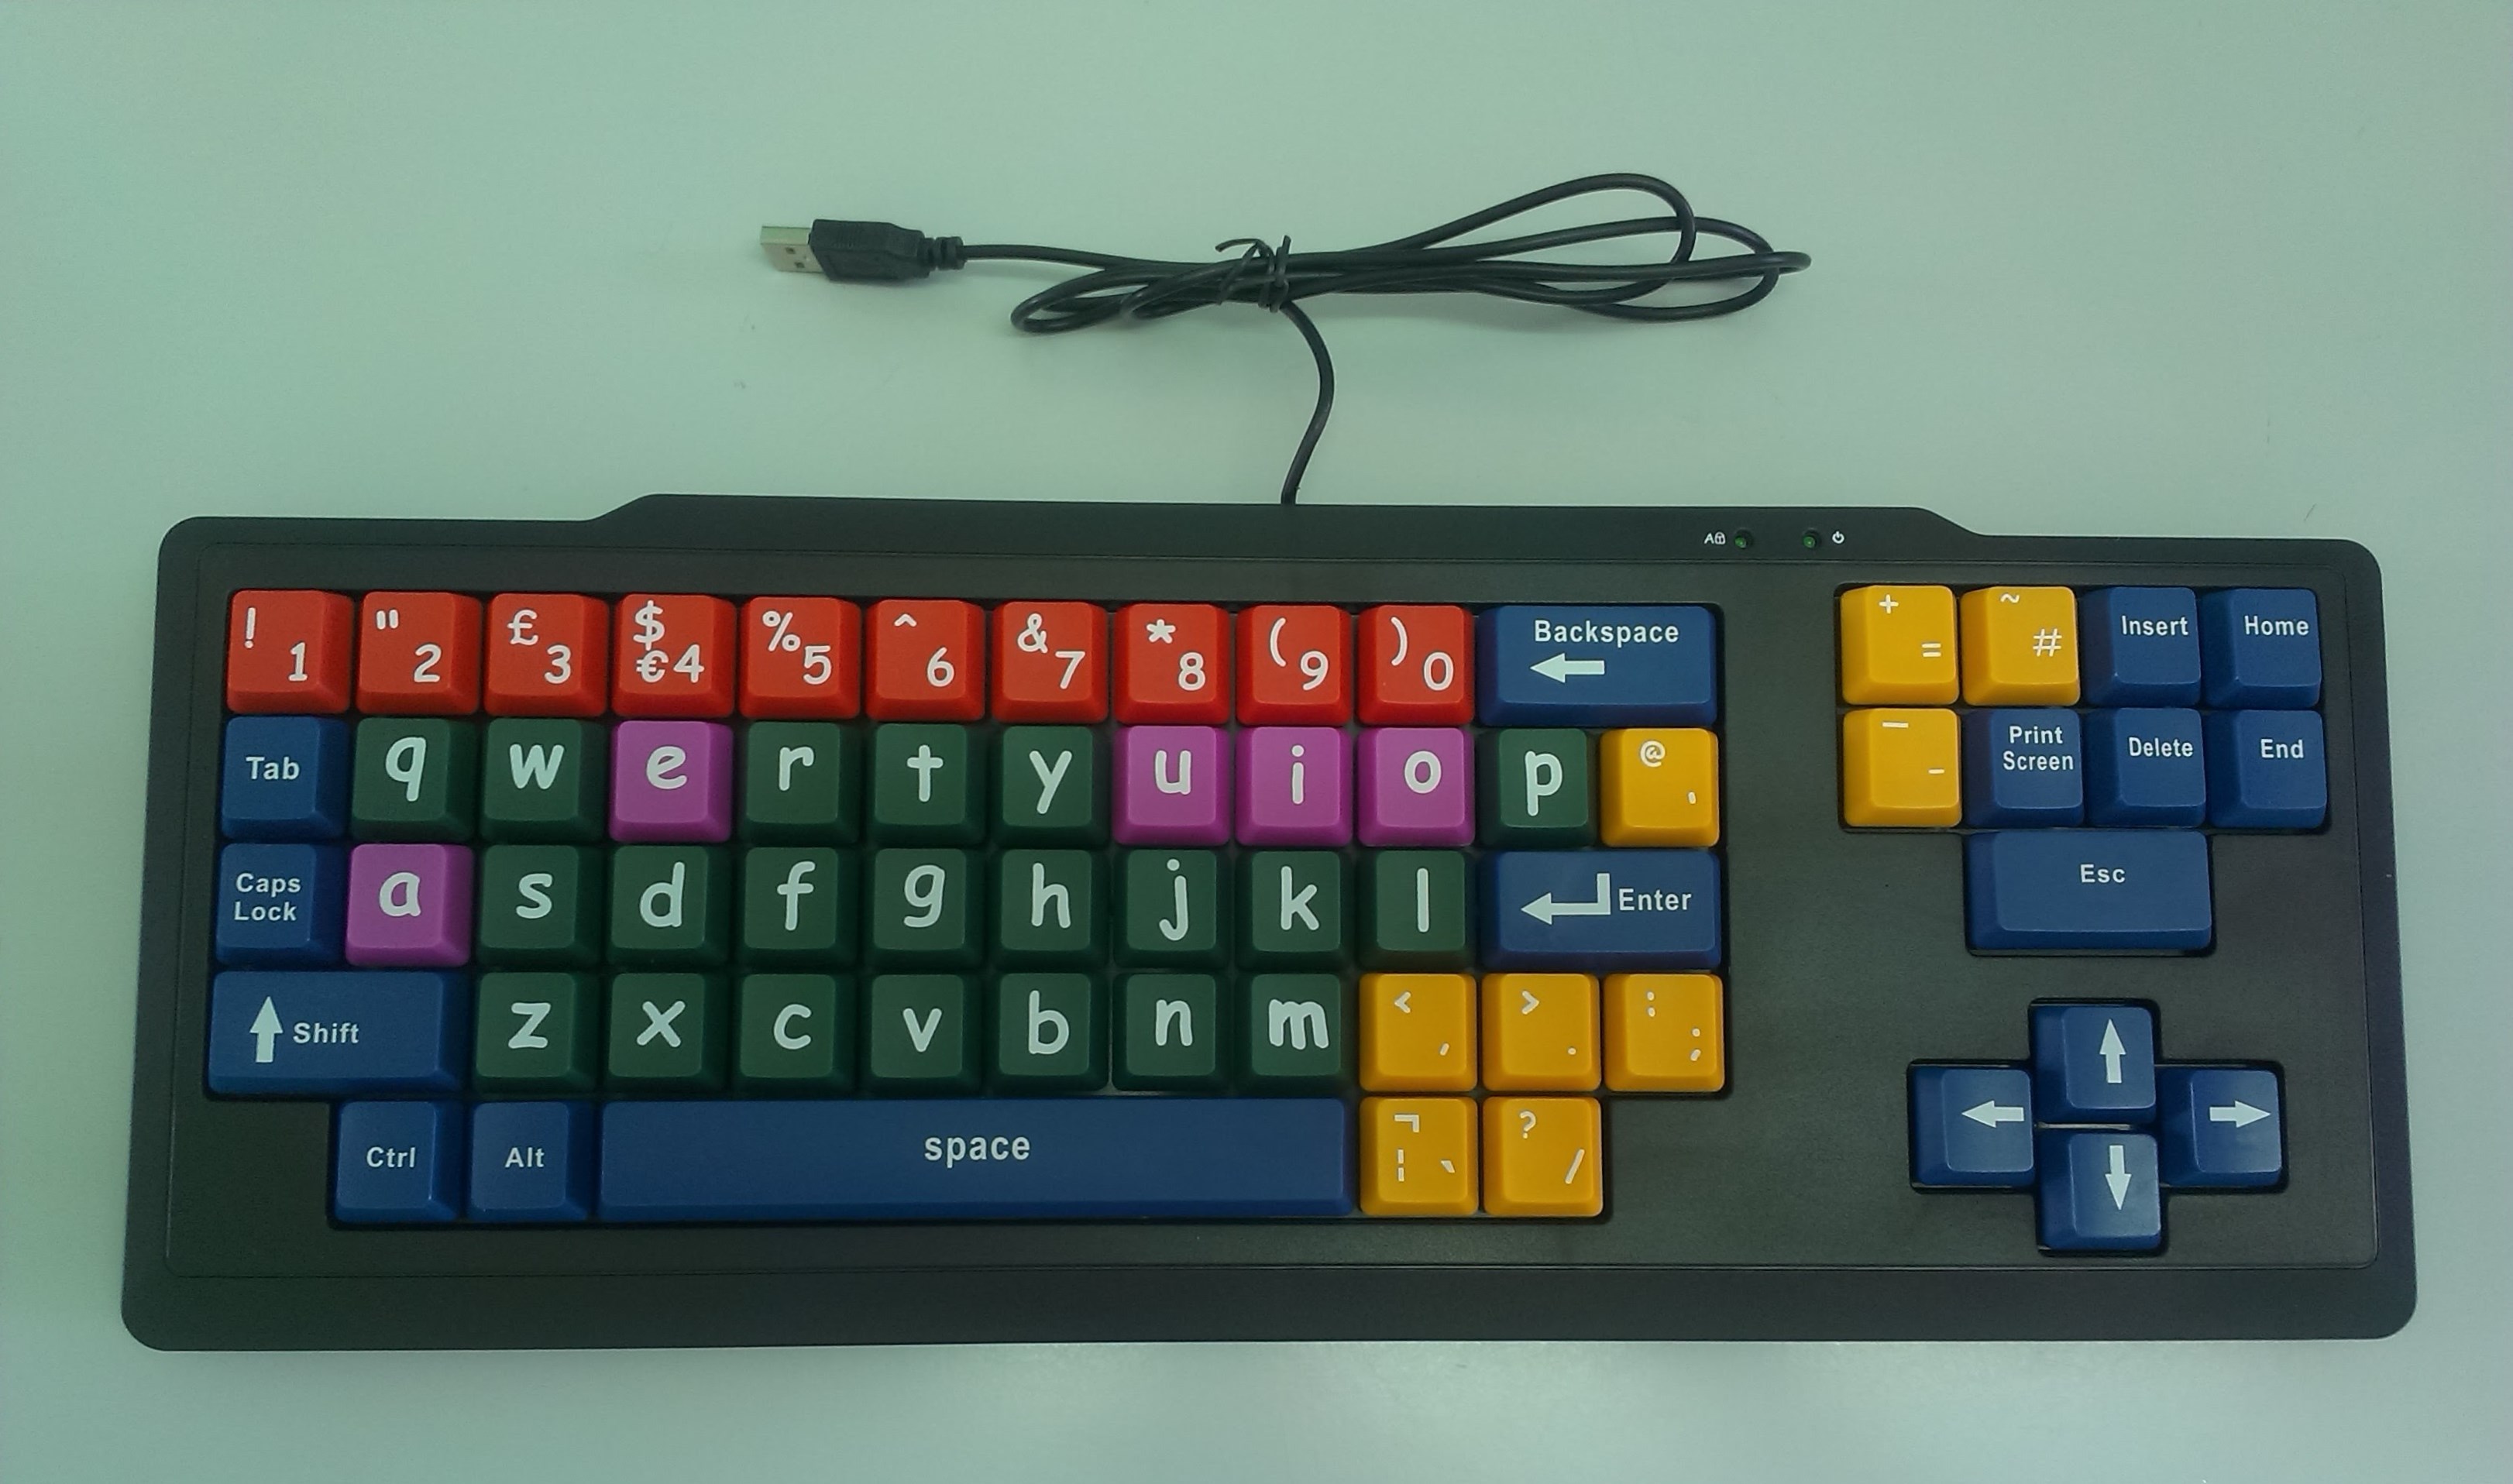 Jumbo keys keyboard - lowercase